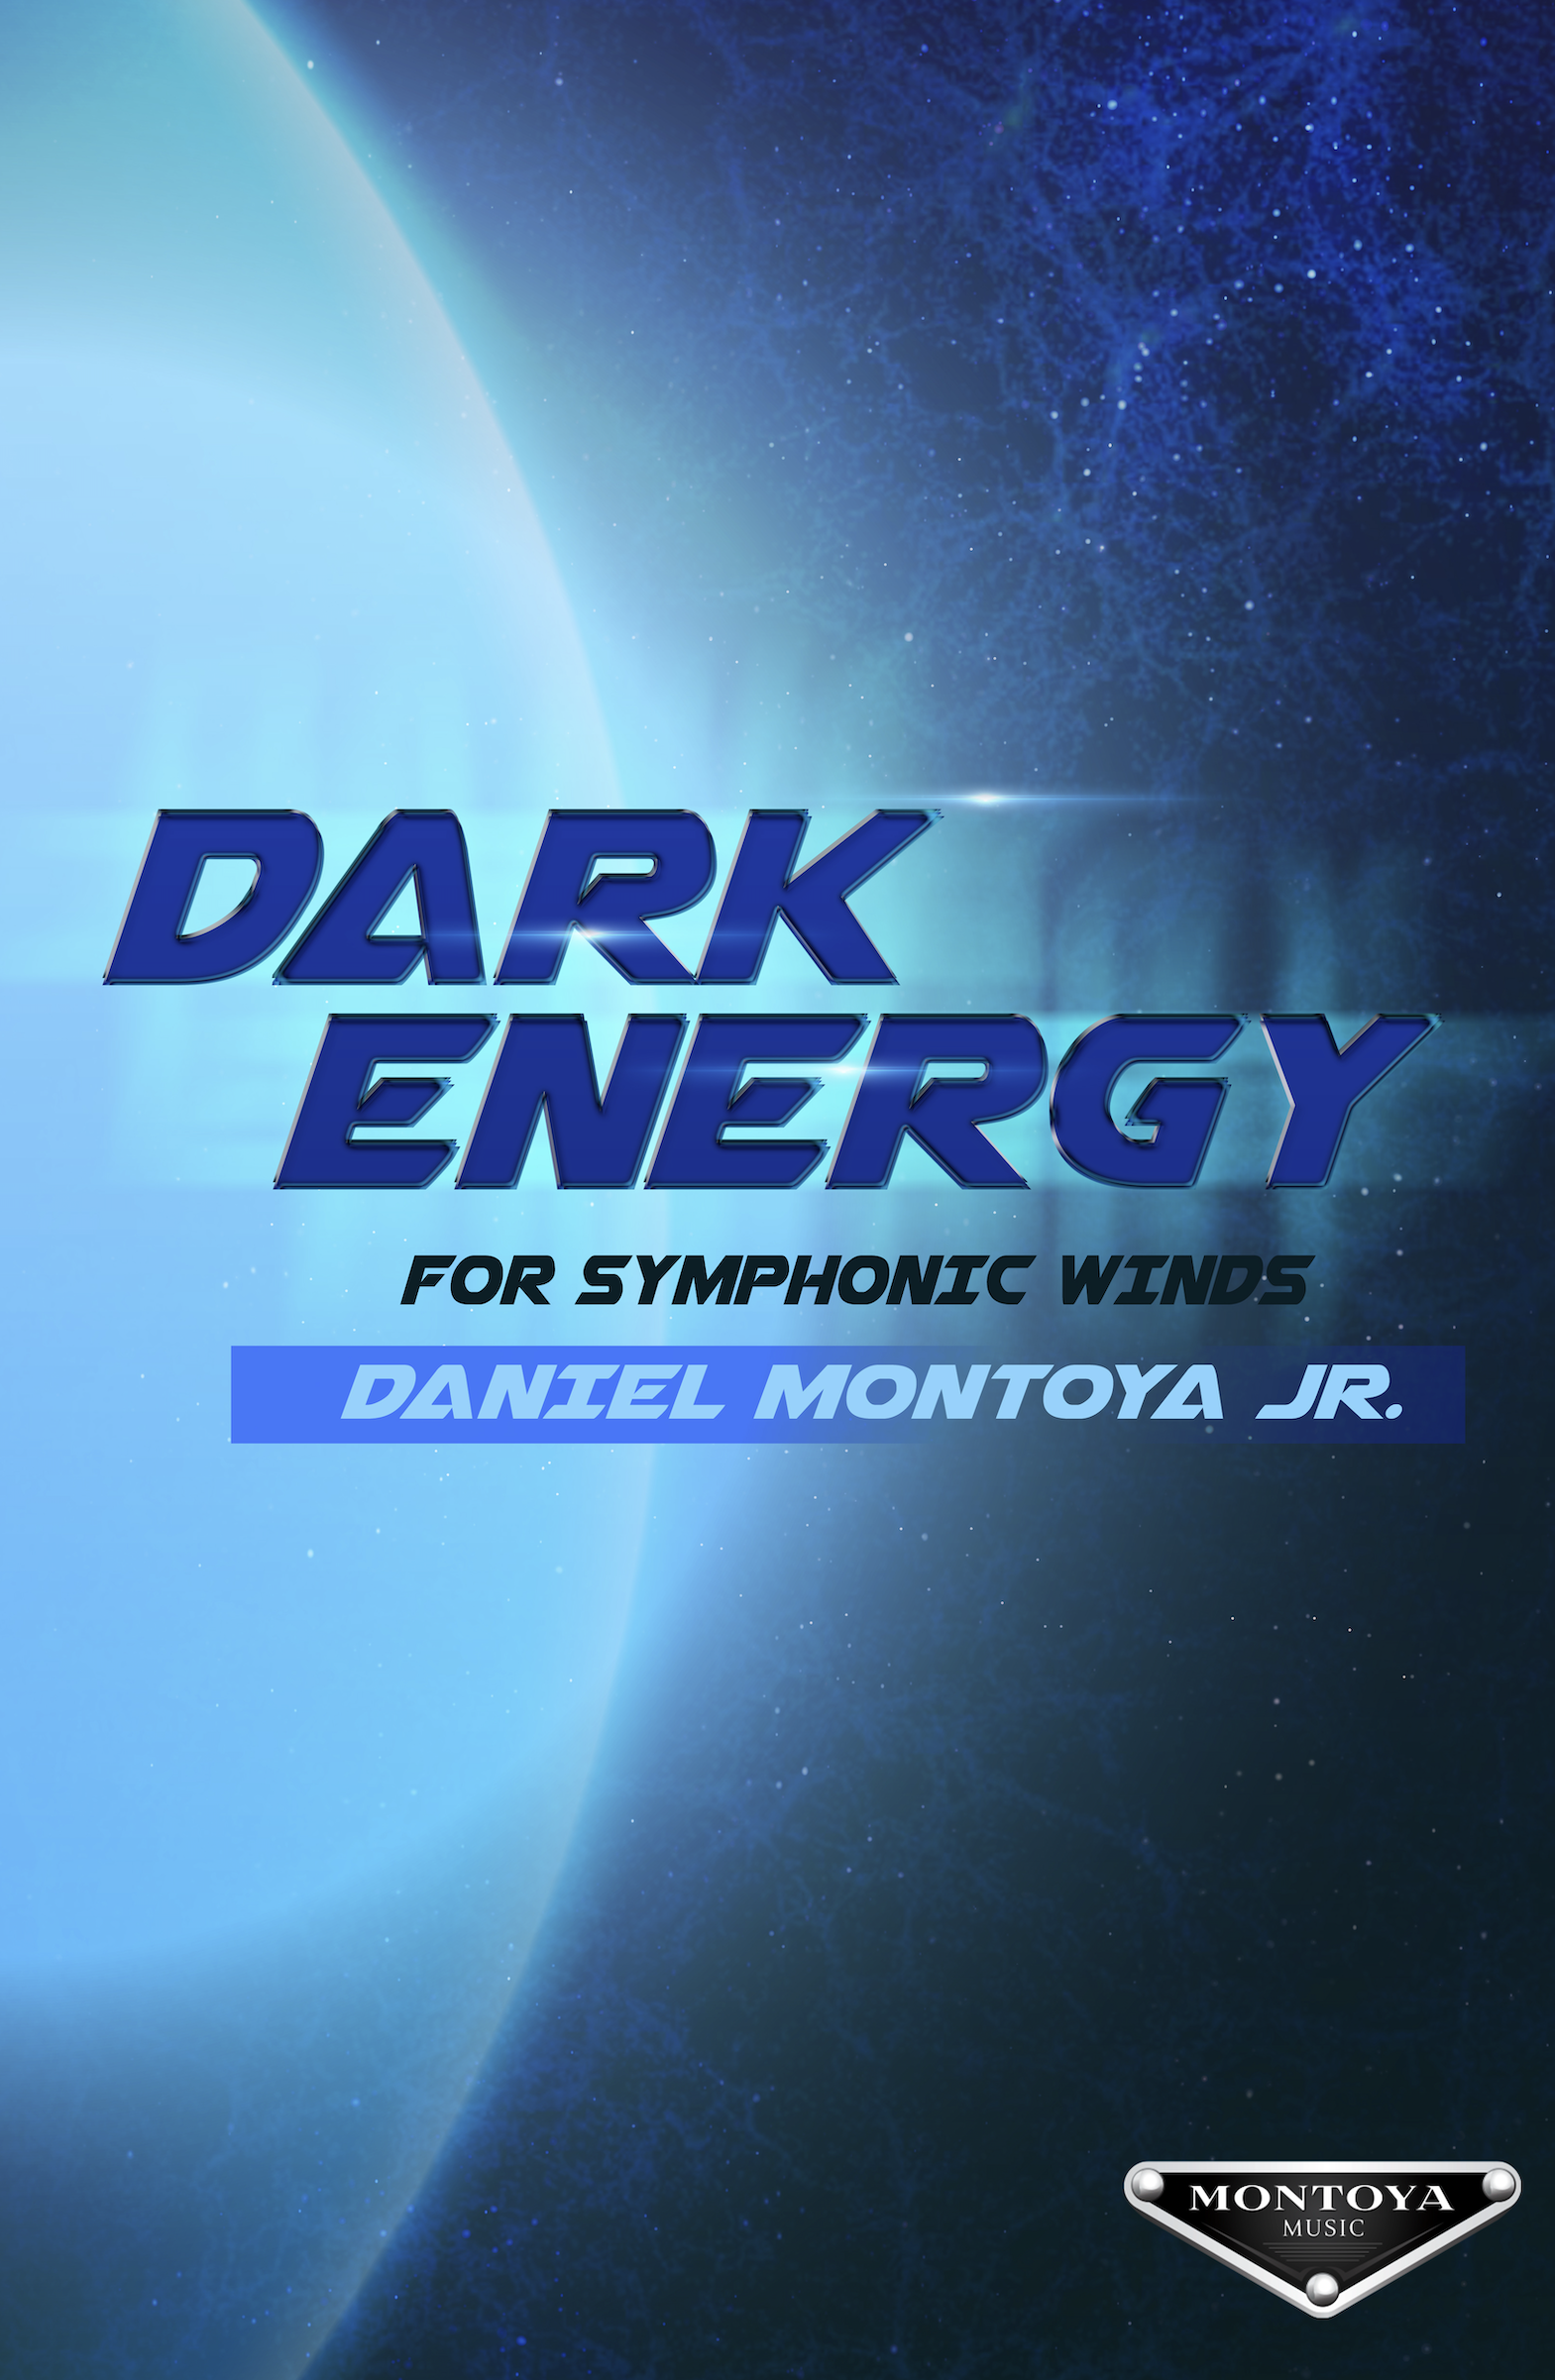 Dark Energy by Daniel Montoya Jr.